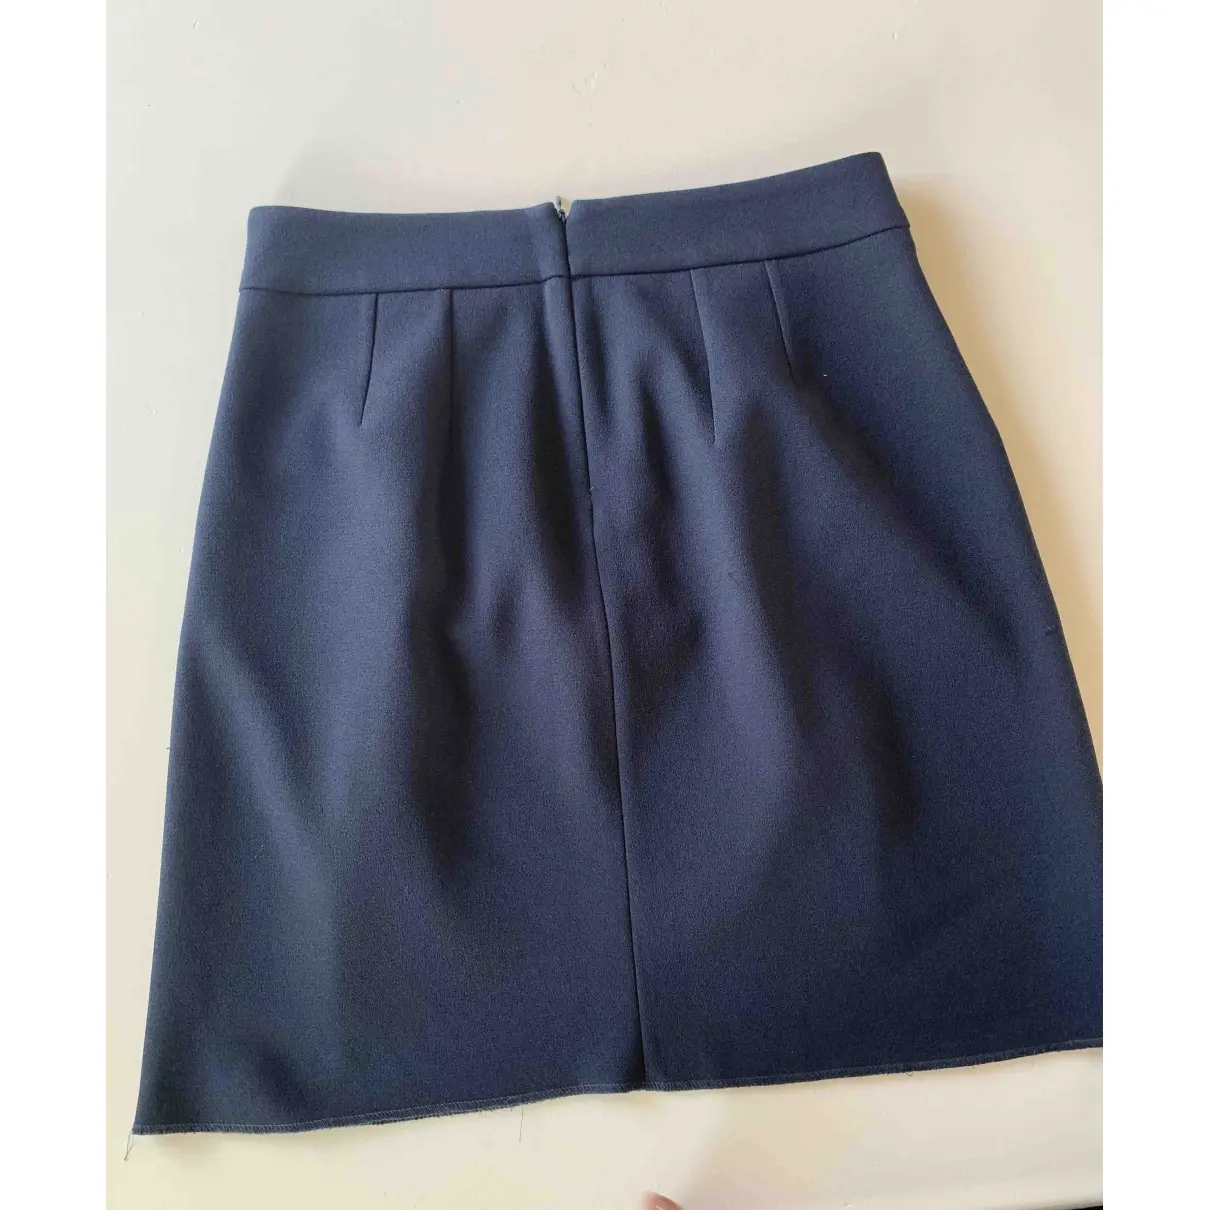 Claudie Pierlot Mid-length skirt for sale